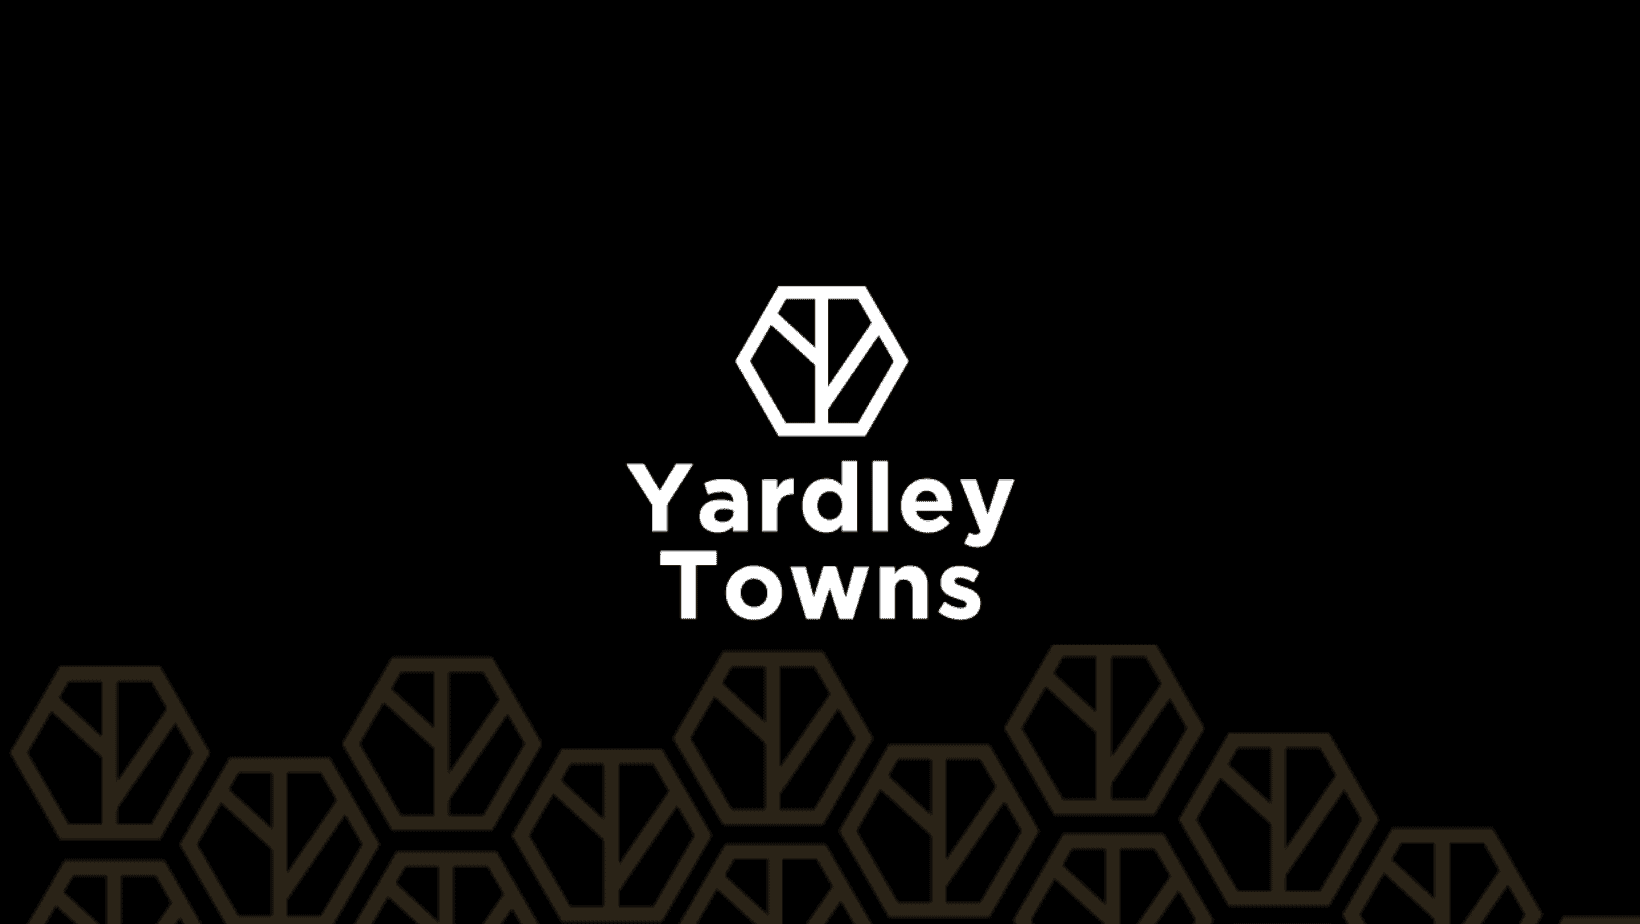 Yardley Towns